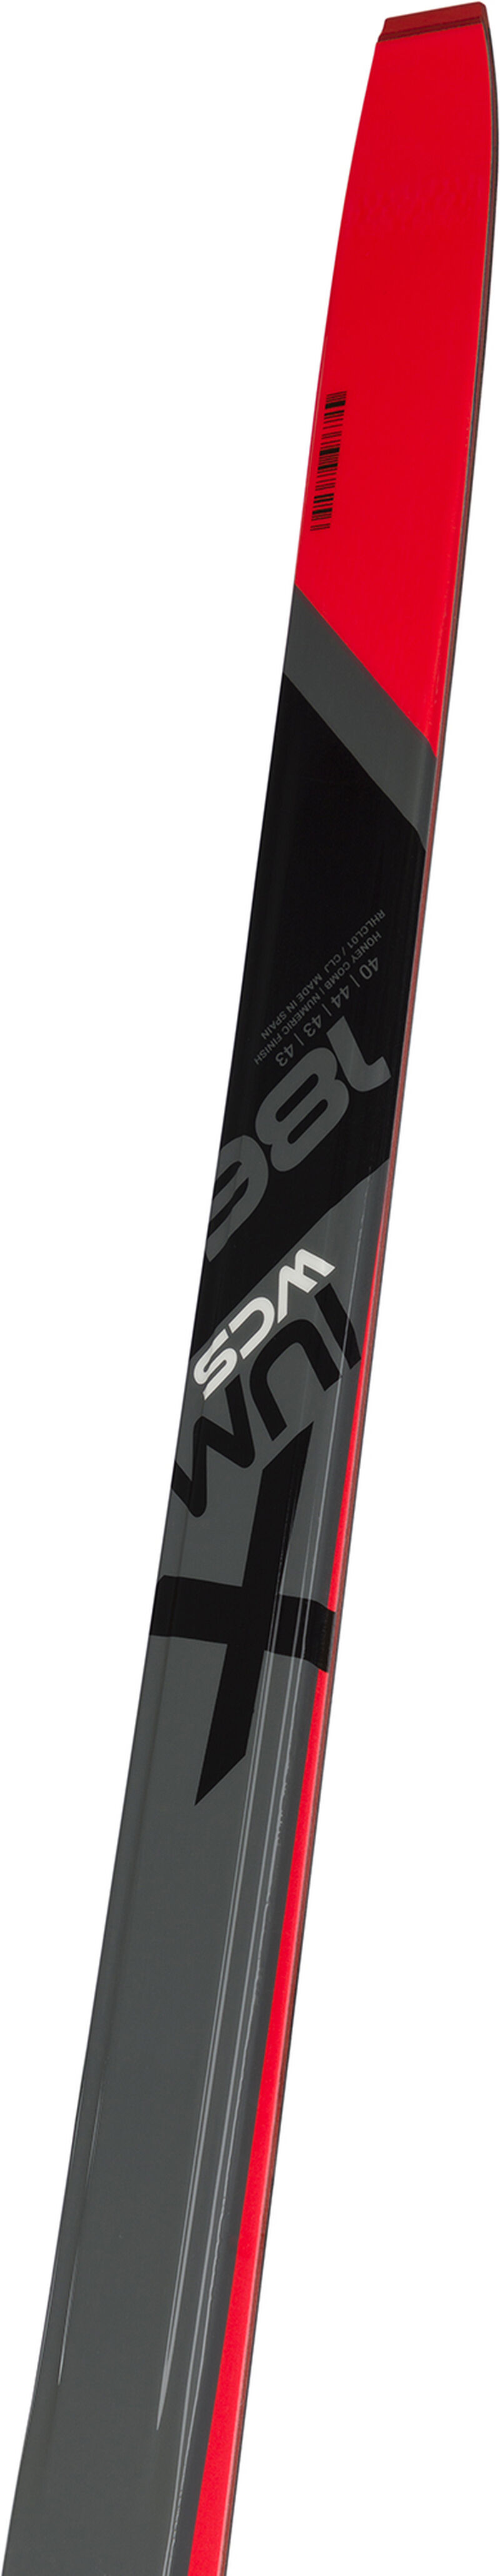 Unisex Nordic Racing Skis X-Ium Skating Wcs-S2 SOFT